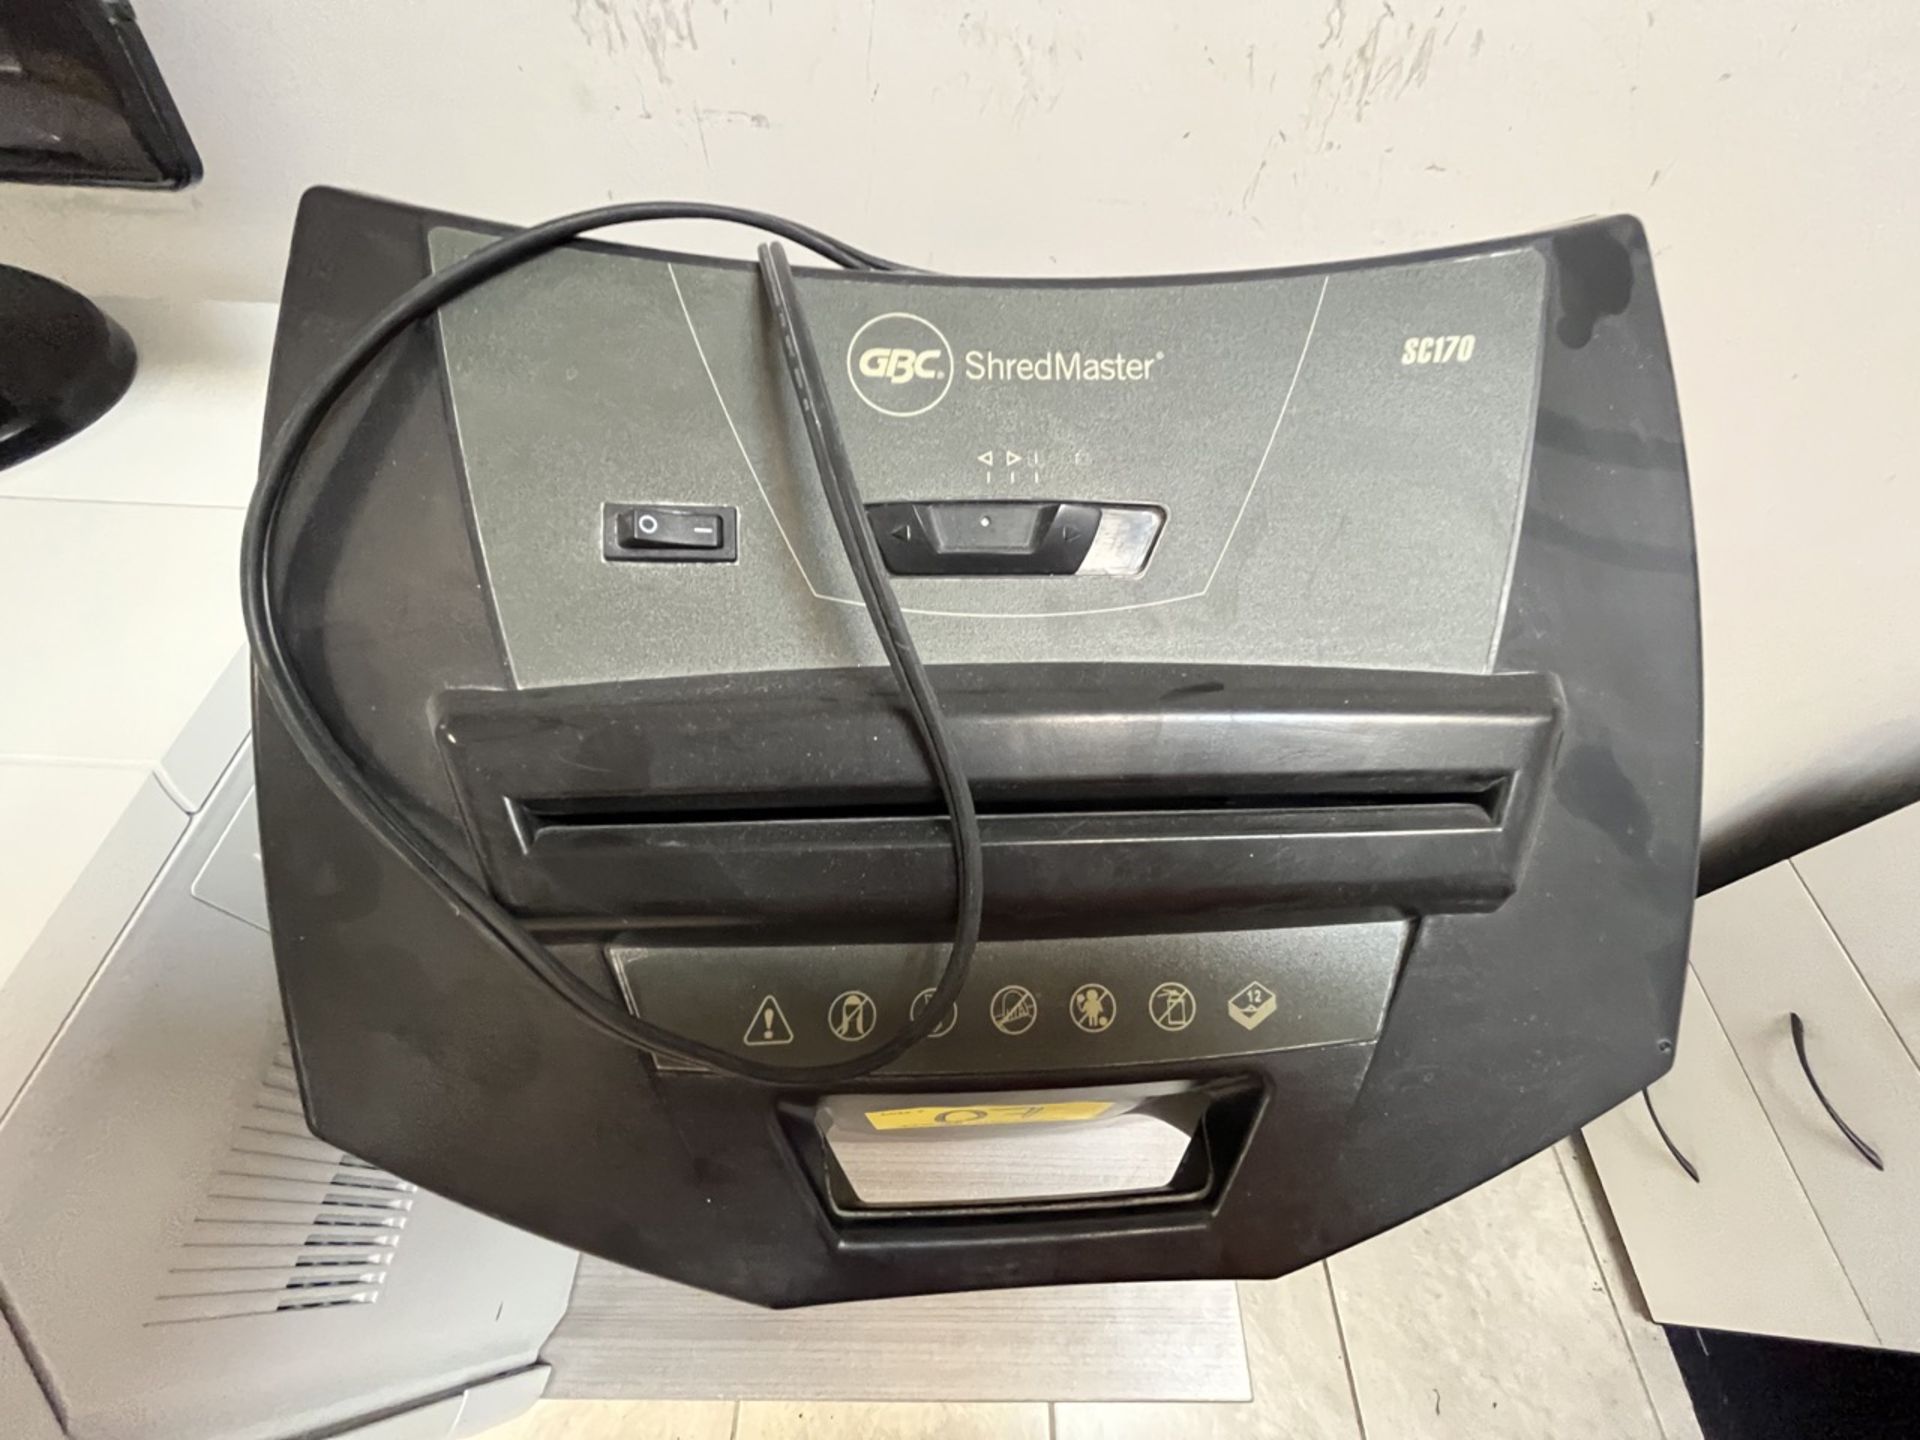 HP Laser Printer, Model E6B68A, Series CNDCJCY038; 1 GBC Paper Shredder, Model SC170, Series 175725 - Image 5 of 13